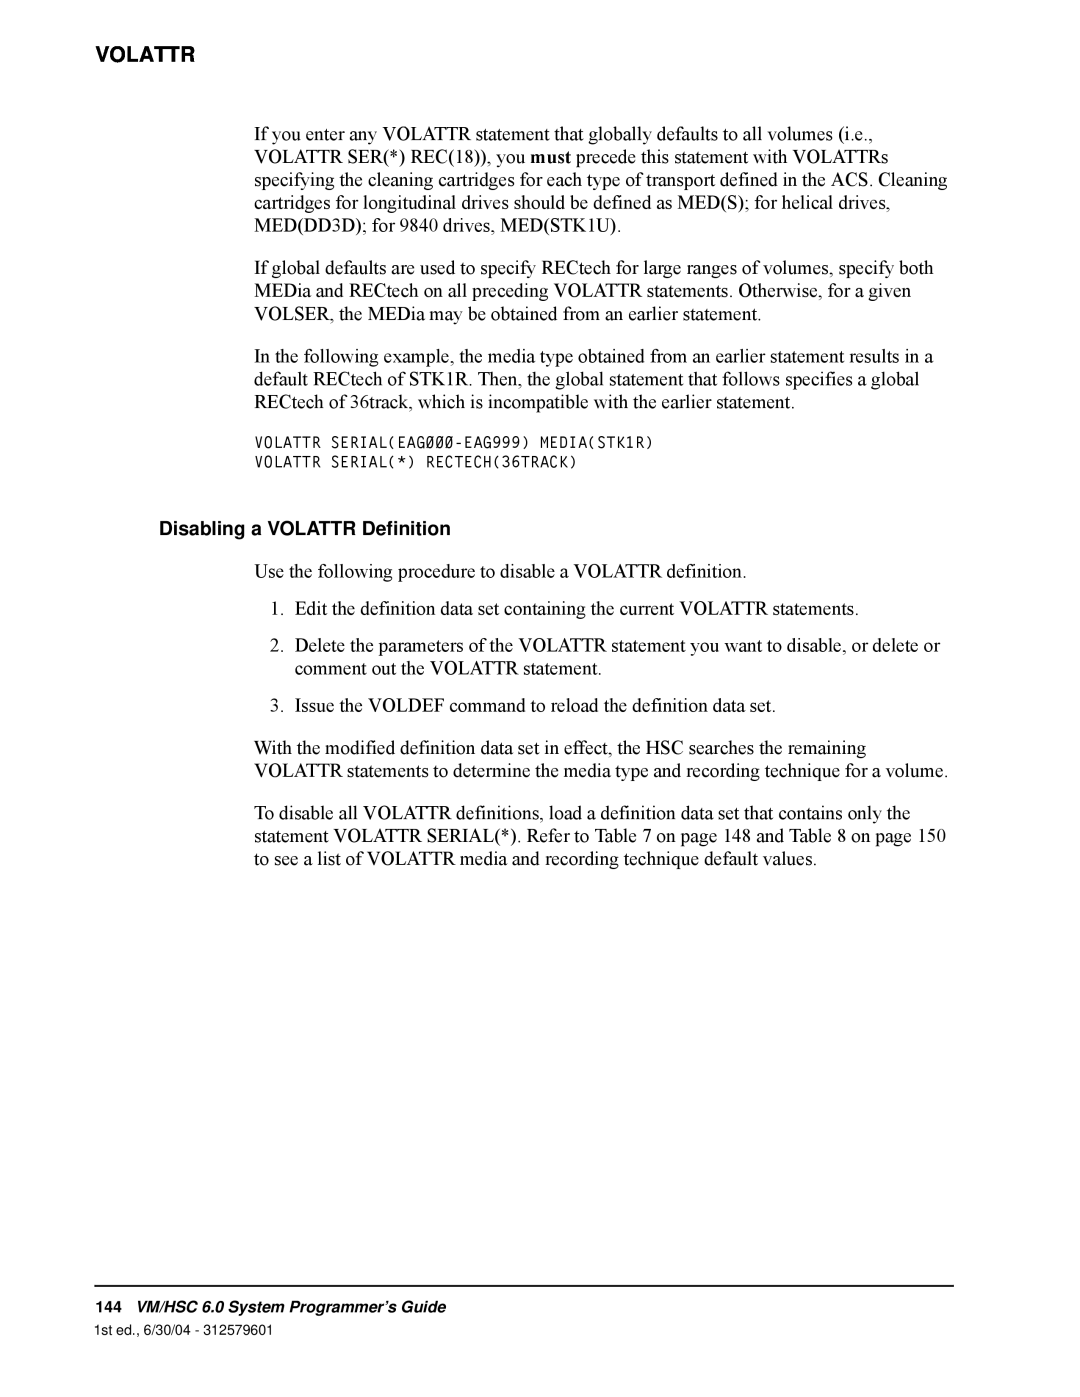 StorageTek manual Disabling a VOLATTR Definition, Volattr, 144VM/HSC 6.0 System Programmer’s Guide 